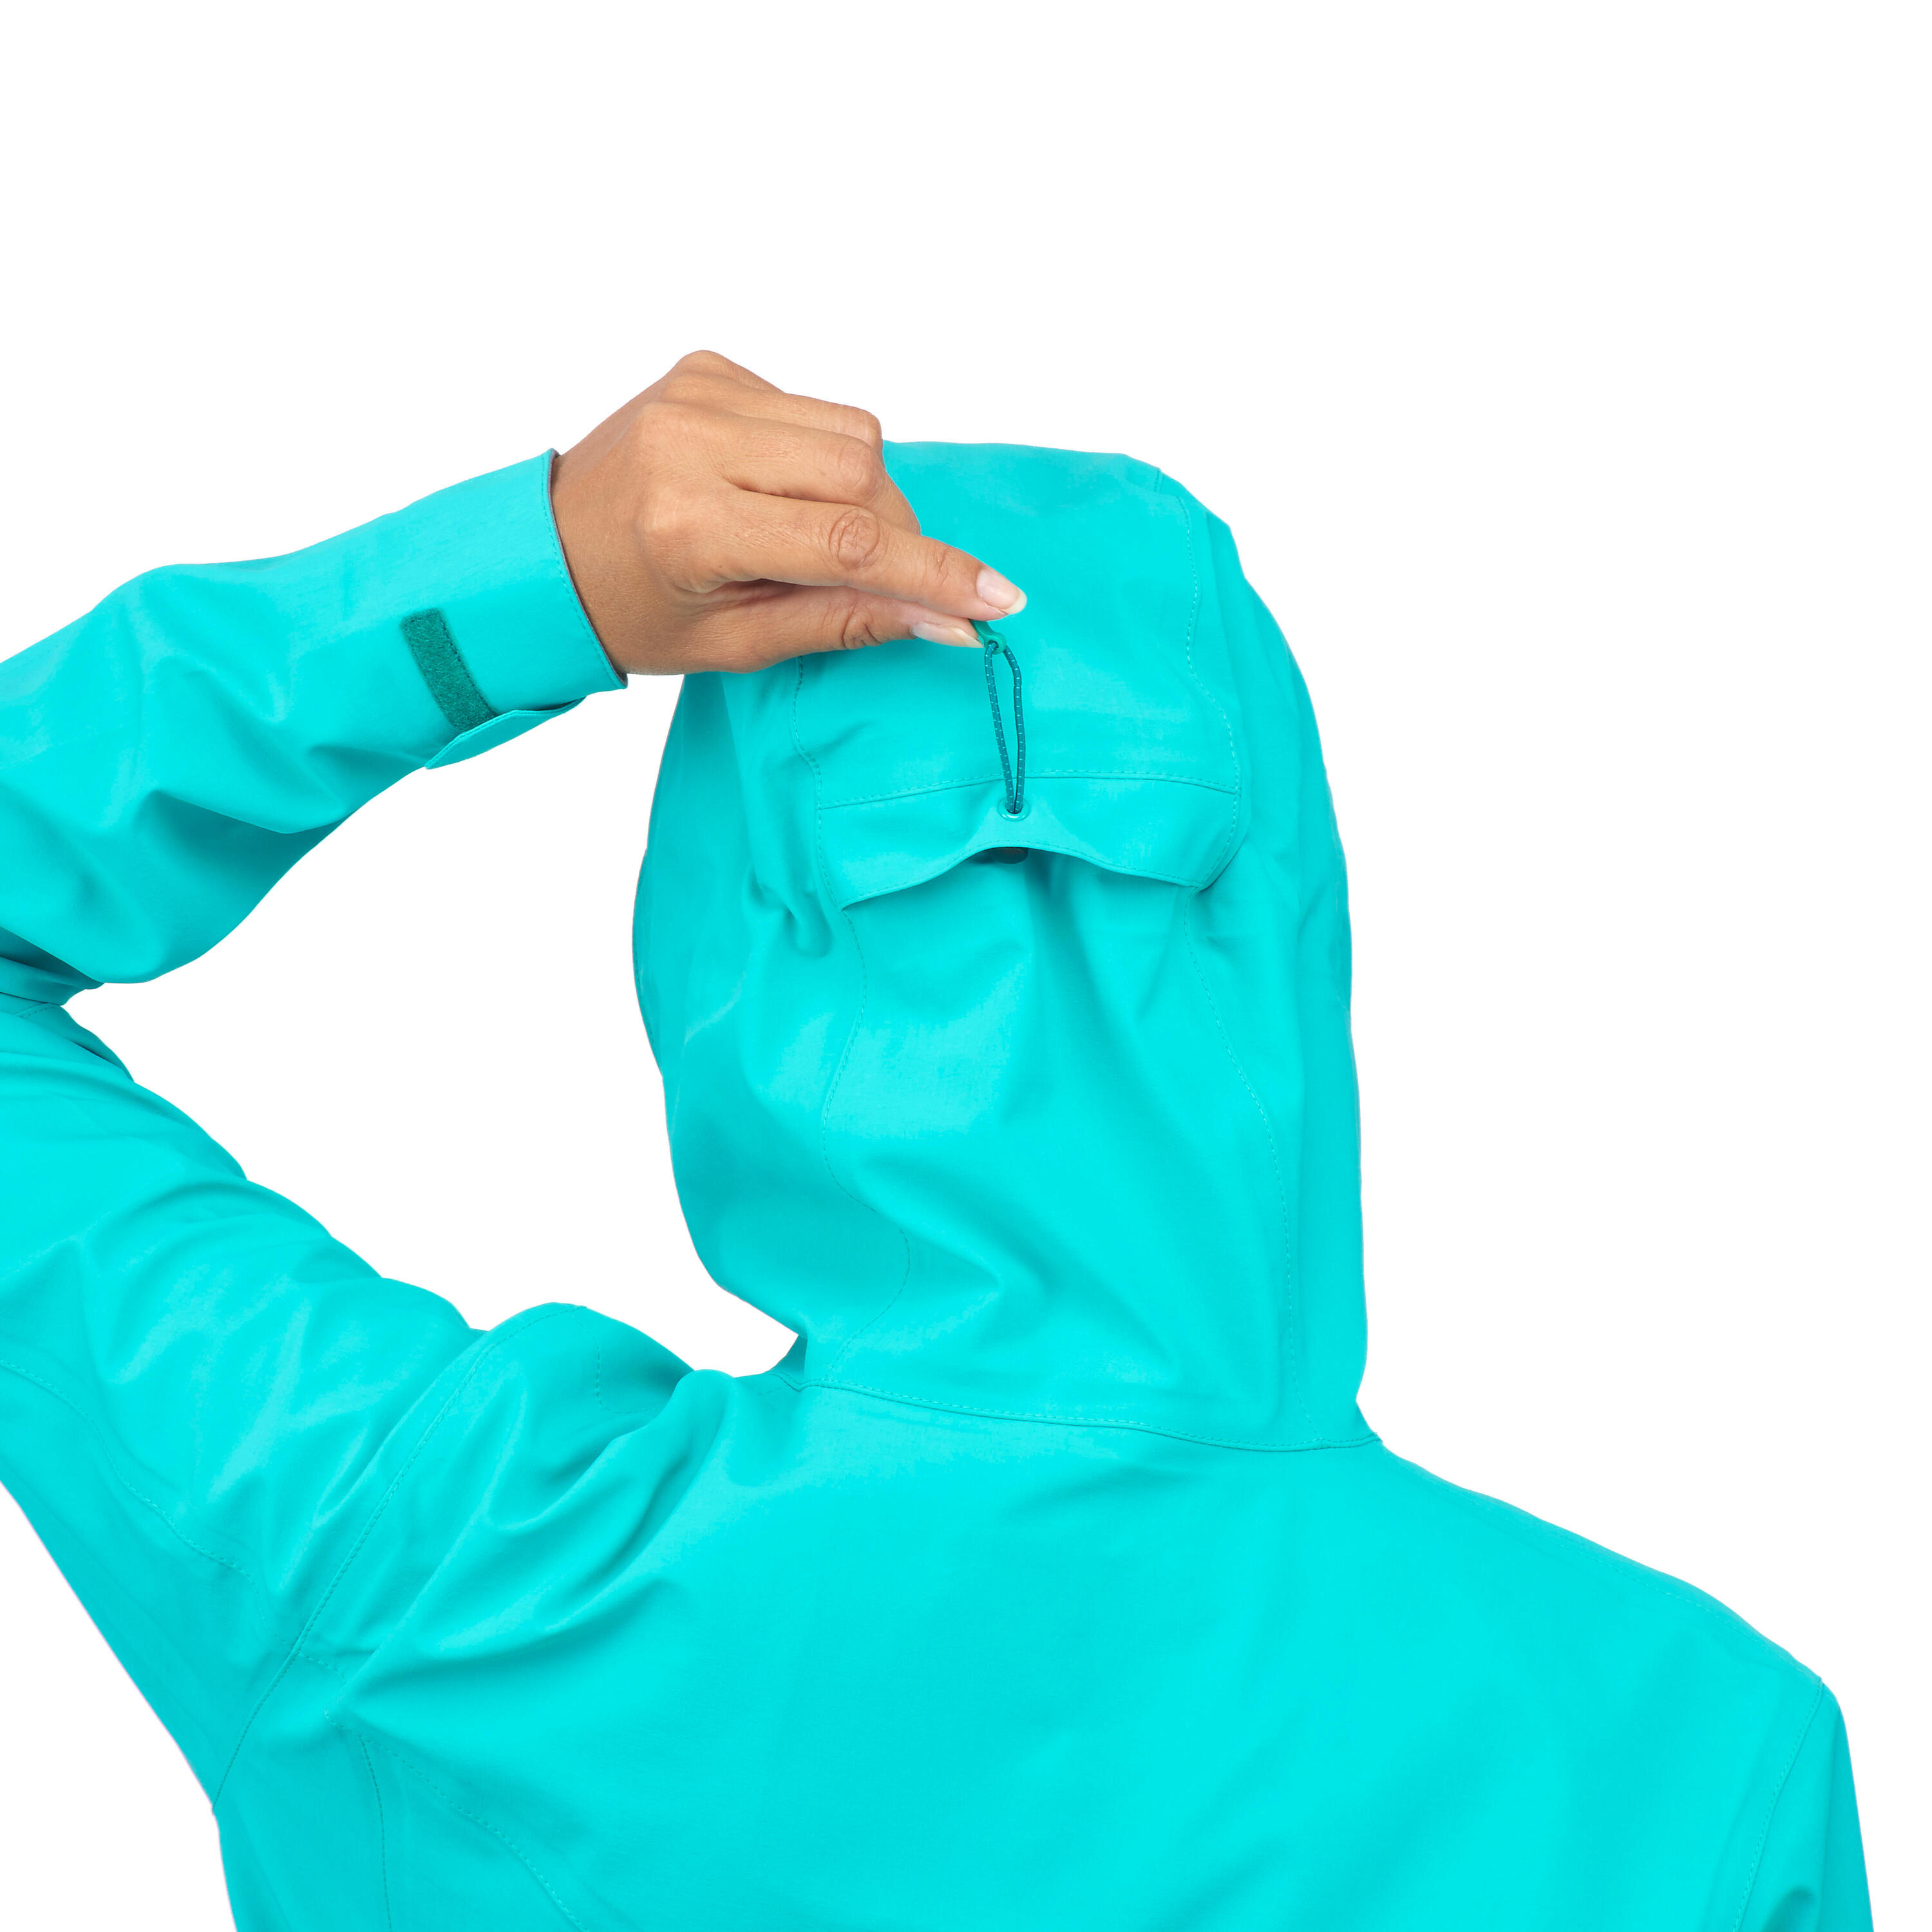 MH500 Women's Mountain Hiking Waterproof Jacket - Turquoise 13/17